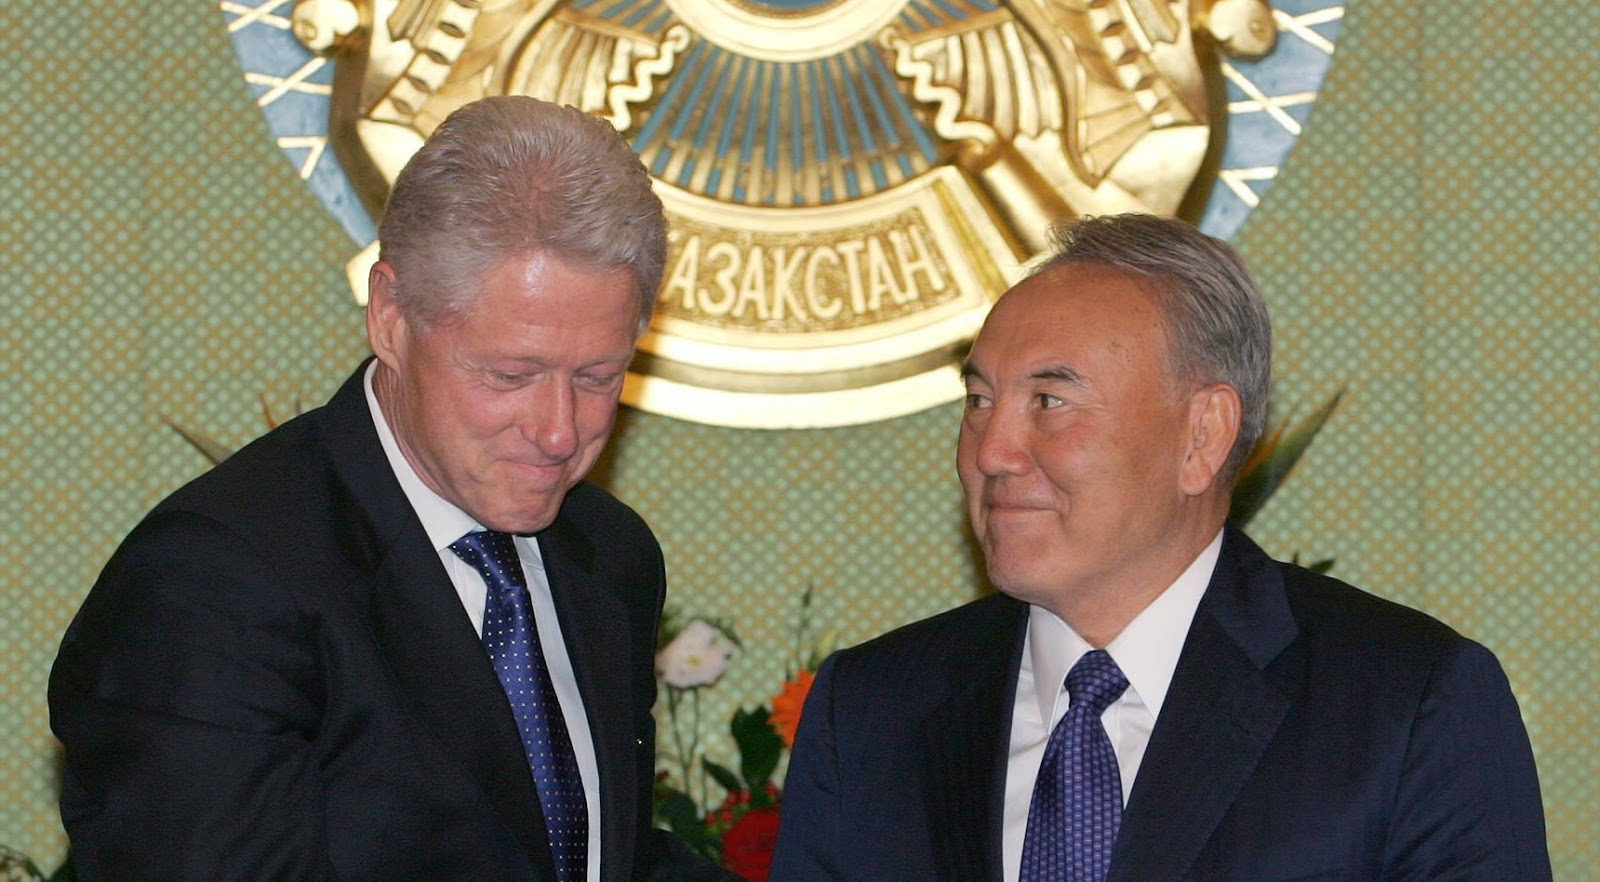 Sep. 06, 2005, Bill Clinton, Kazakhstan strongman Nursultan A. Nazarbayev cutting Urasia uranium mining deal for Clinton friend, Canadian Frank Giustra, in one day.